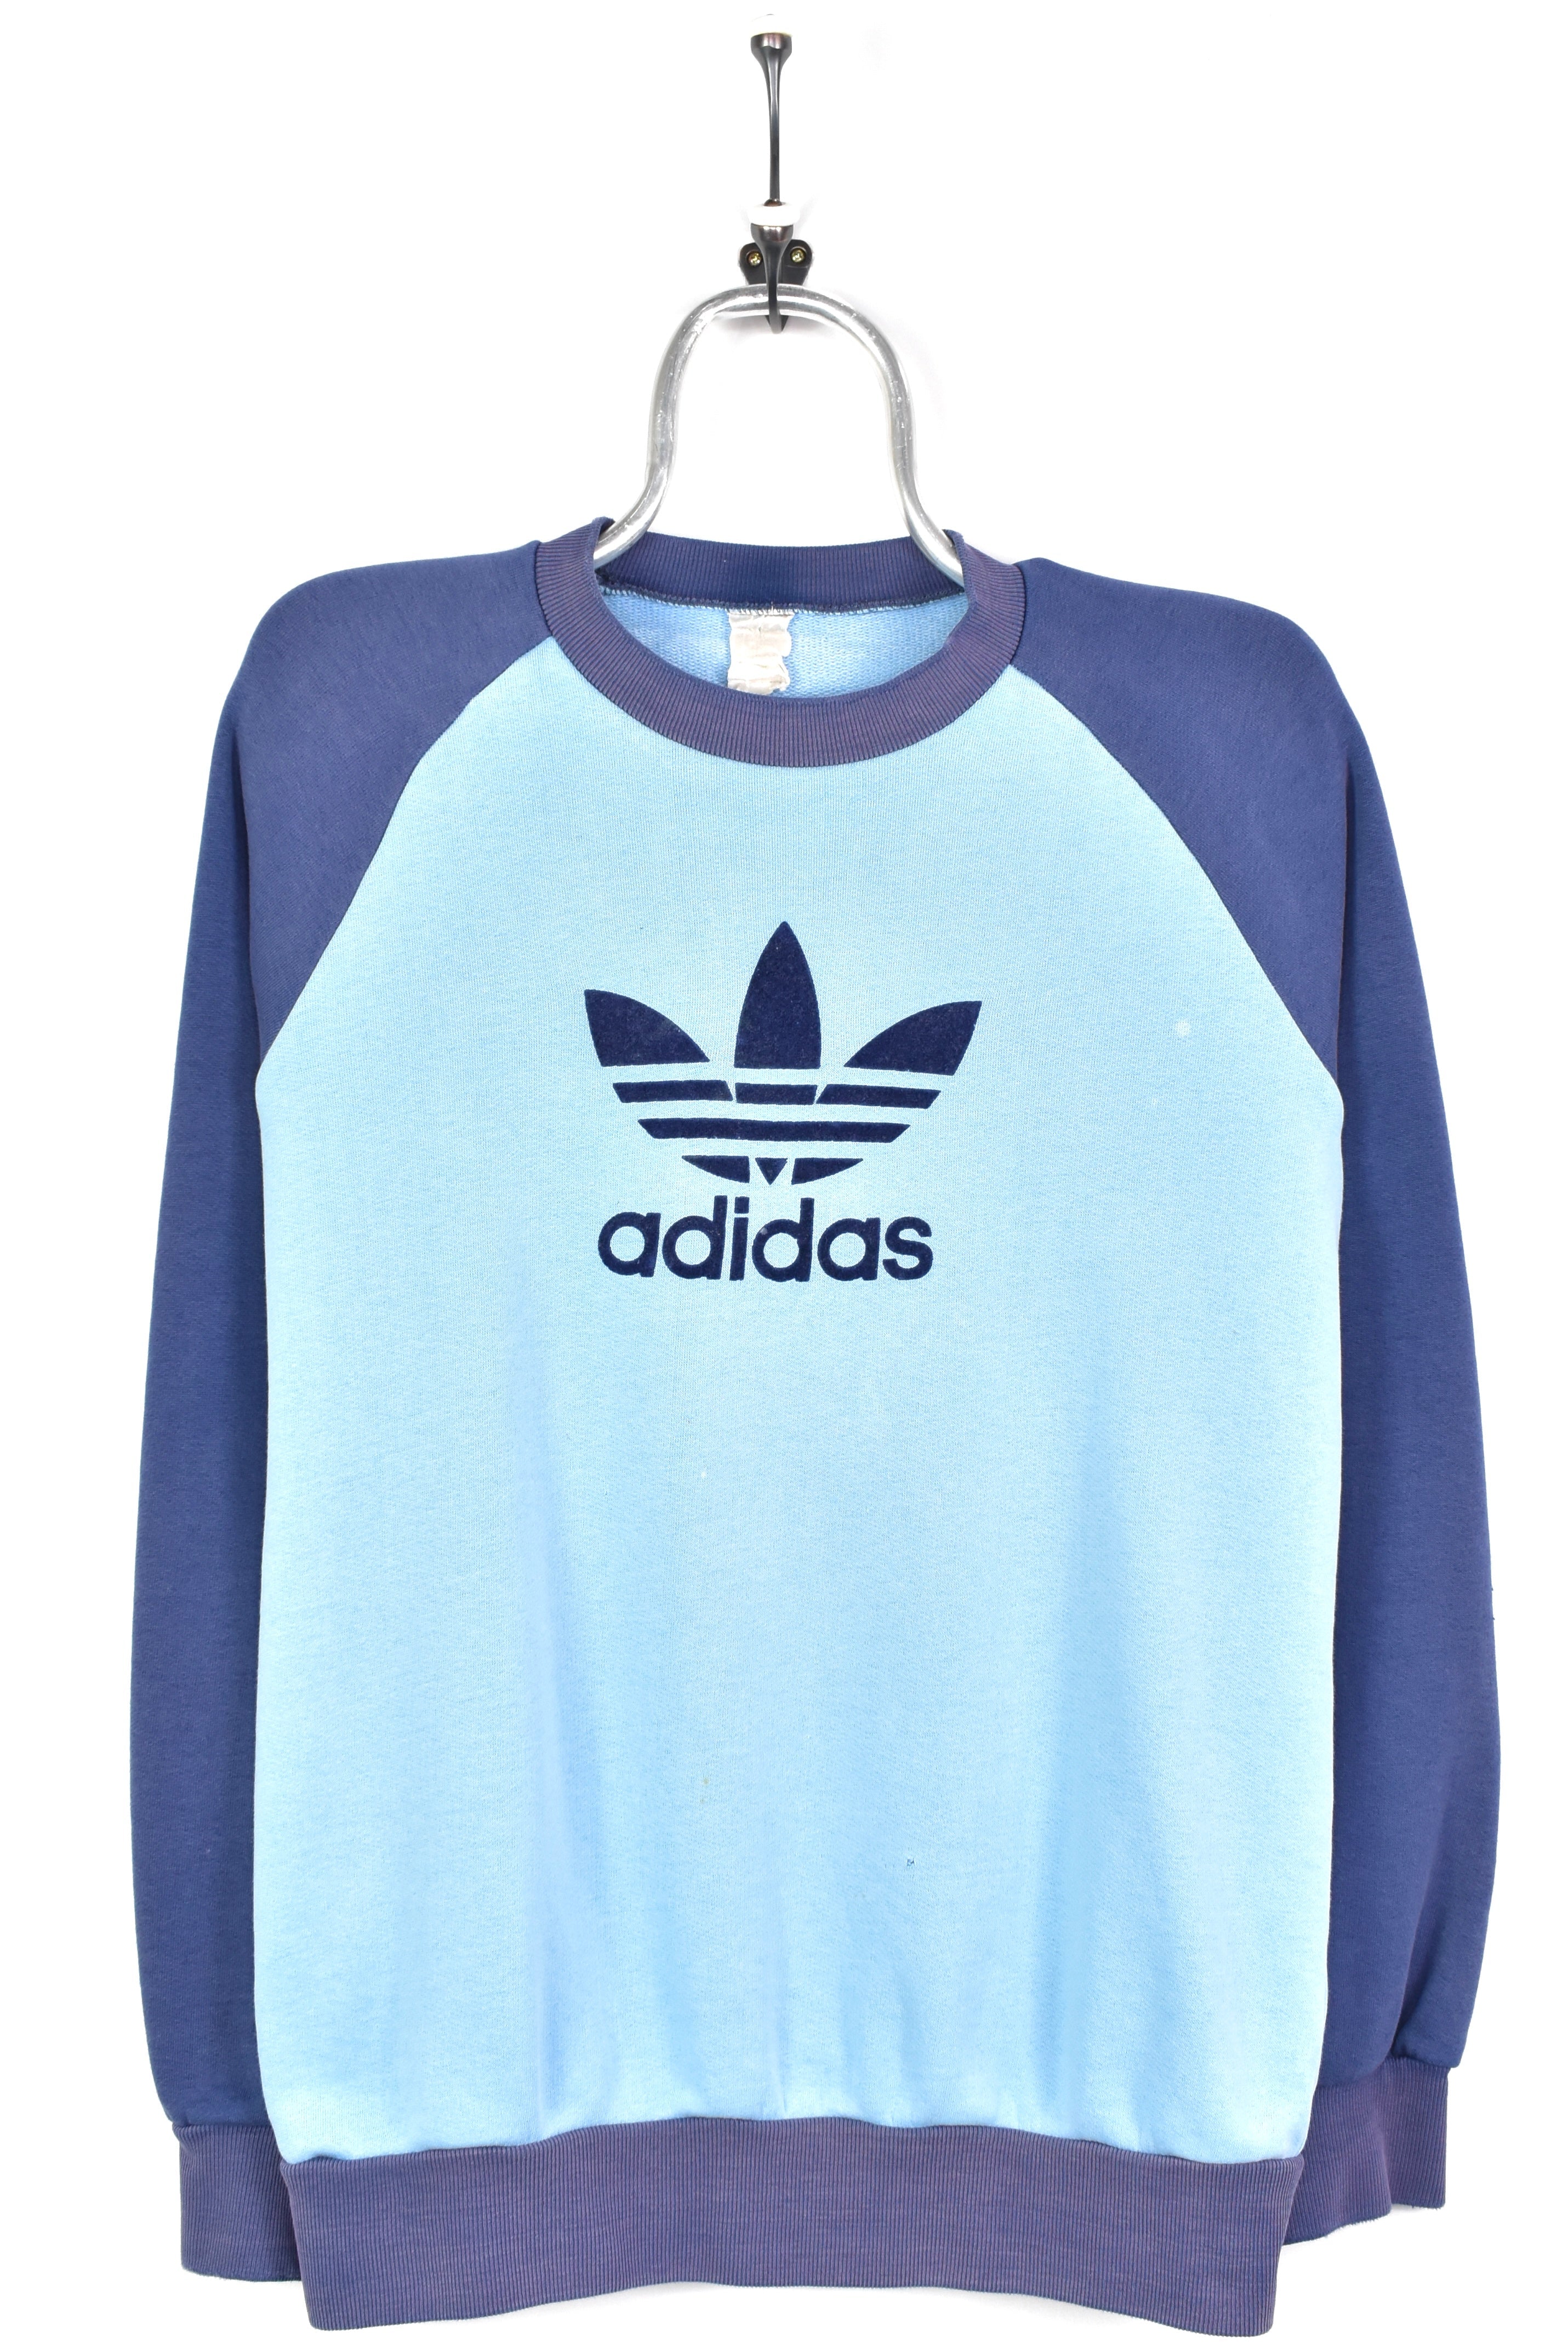 Vintage Adidas sweatshirt, blue graphic crewneck - AU Large ADIDAS